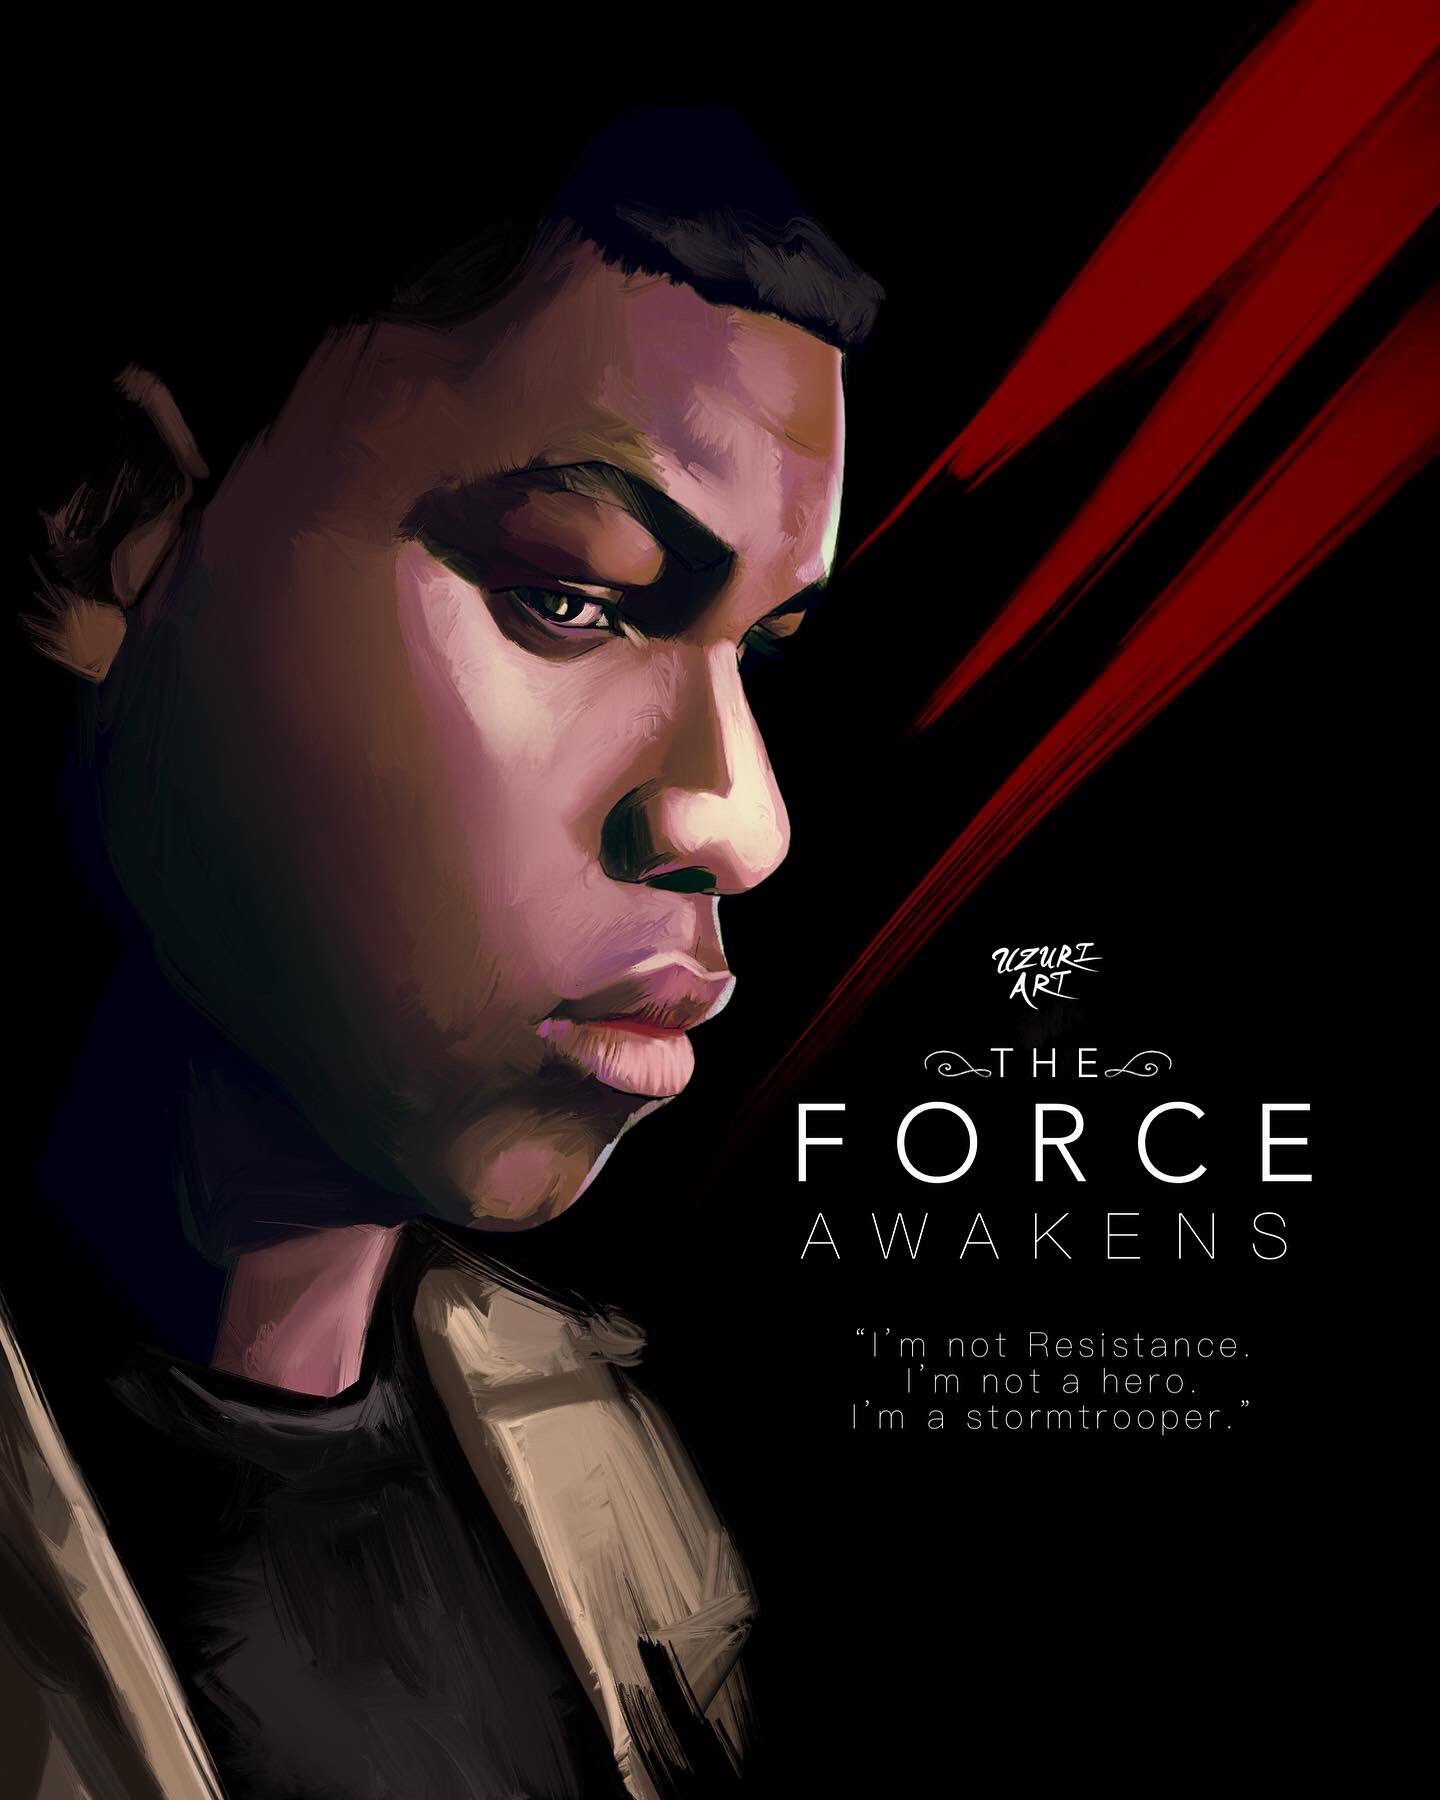 Artista cria cartazes fan art incríveis de Star Wars